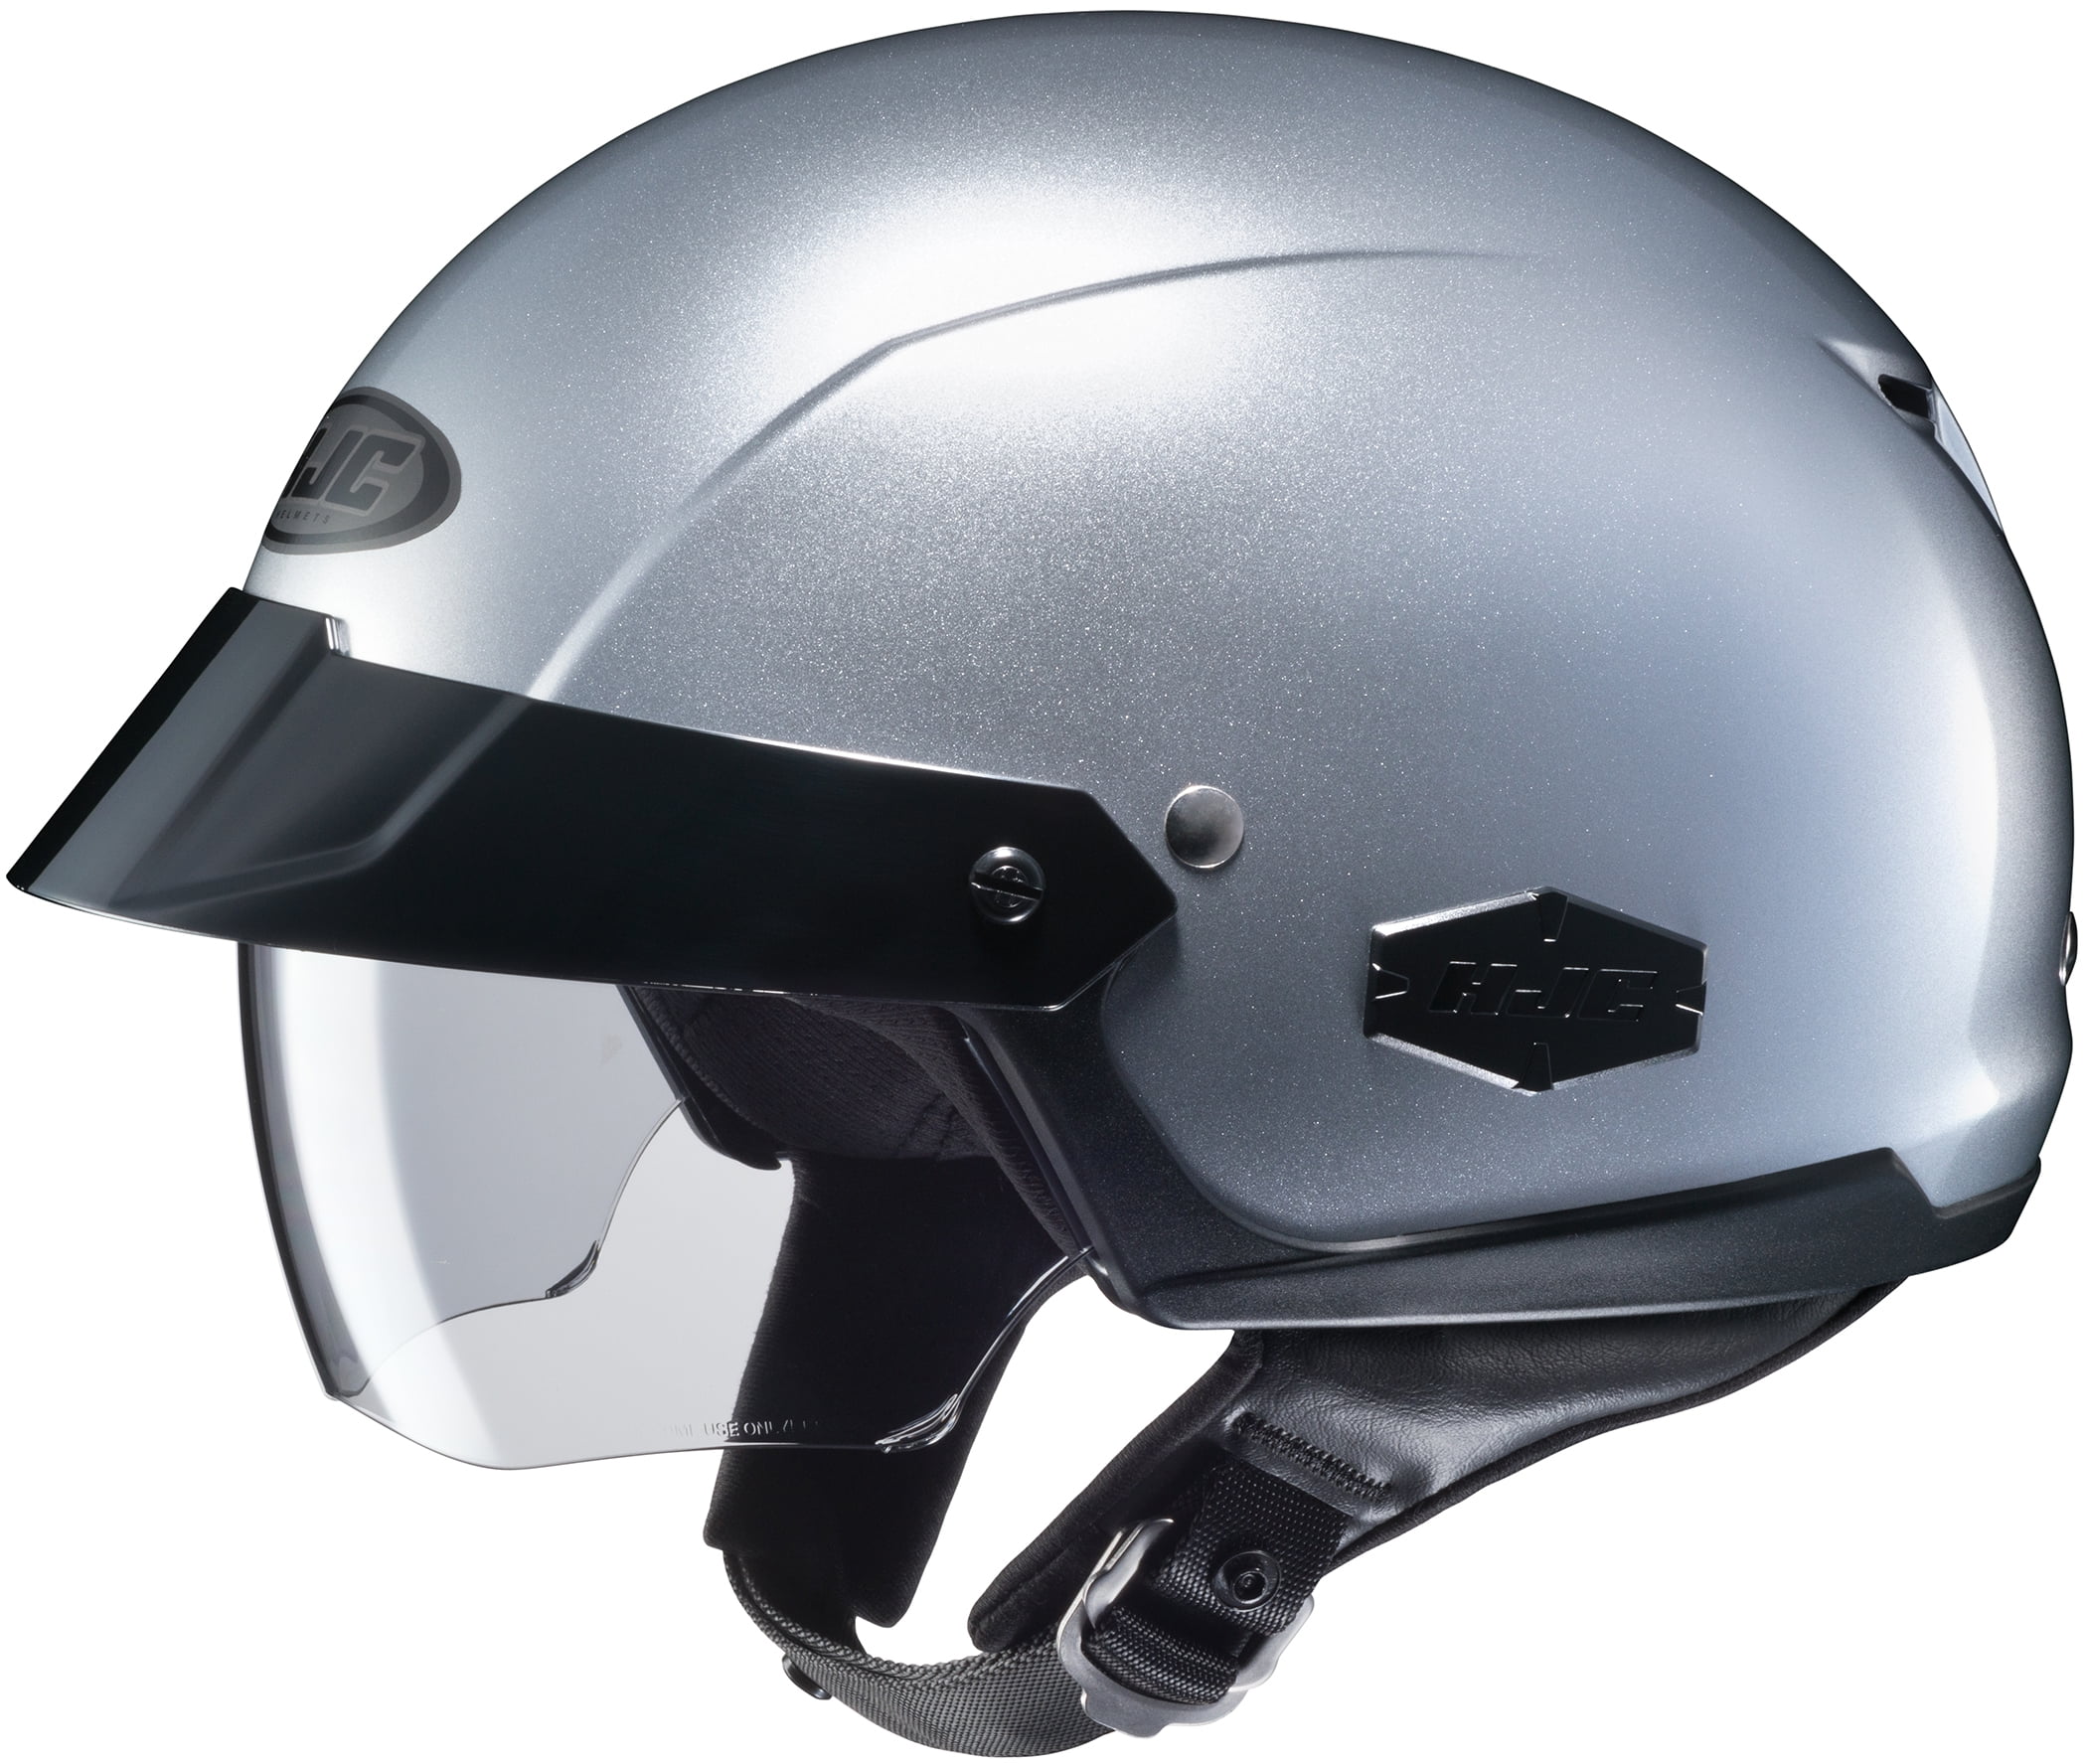 IS-Cruiser Half Helmet Solid Colors LRG 0824-0117-06